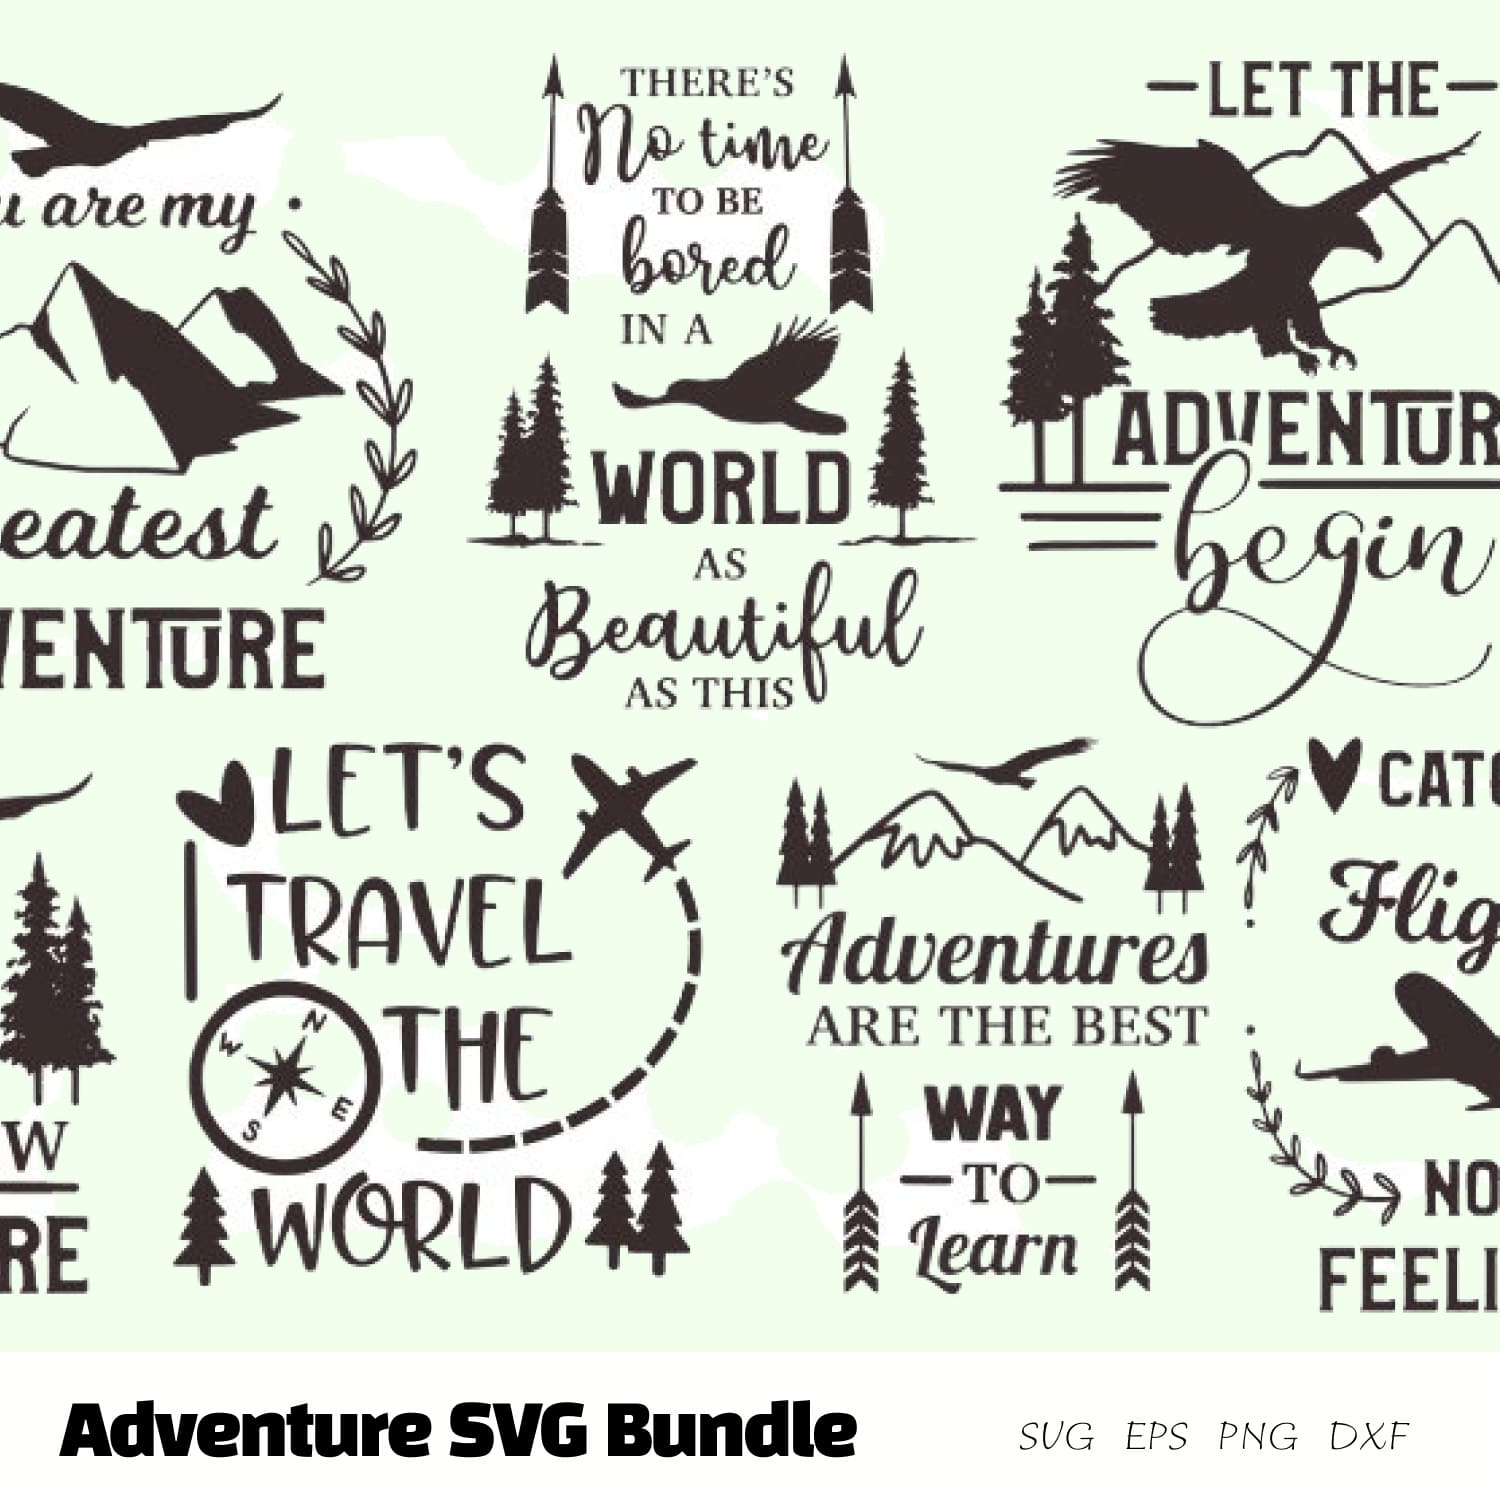 Adventure SVG Bundle.